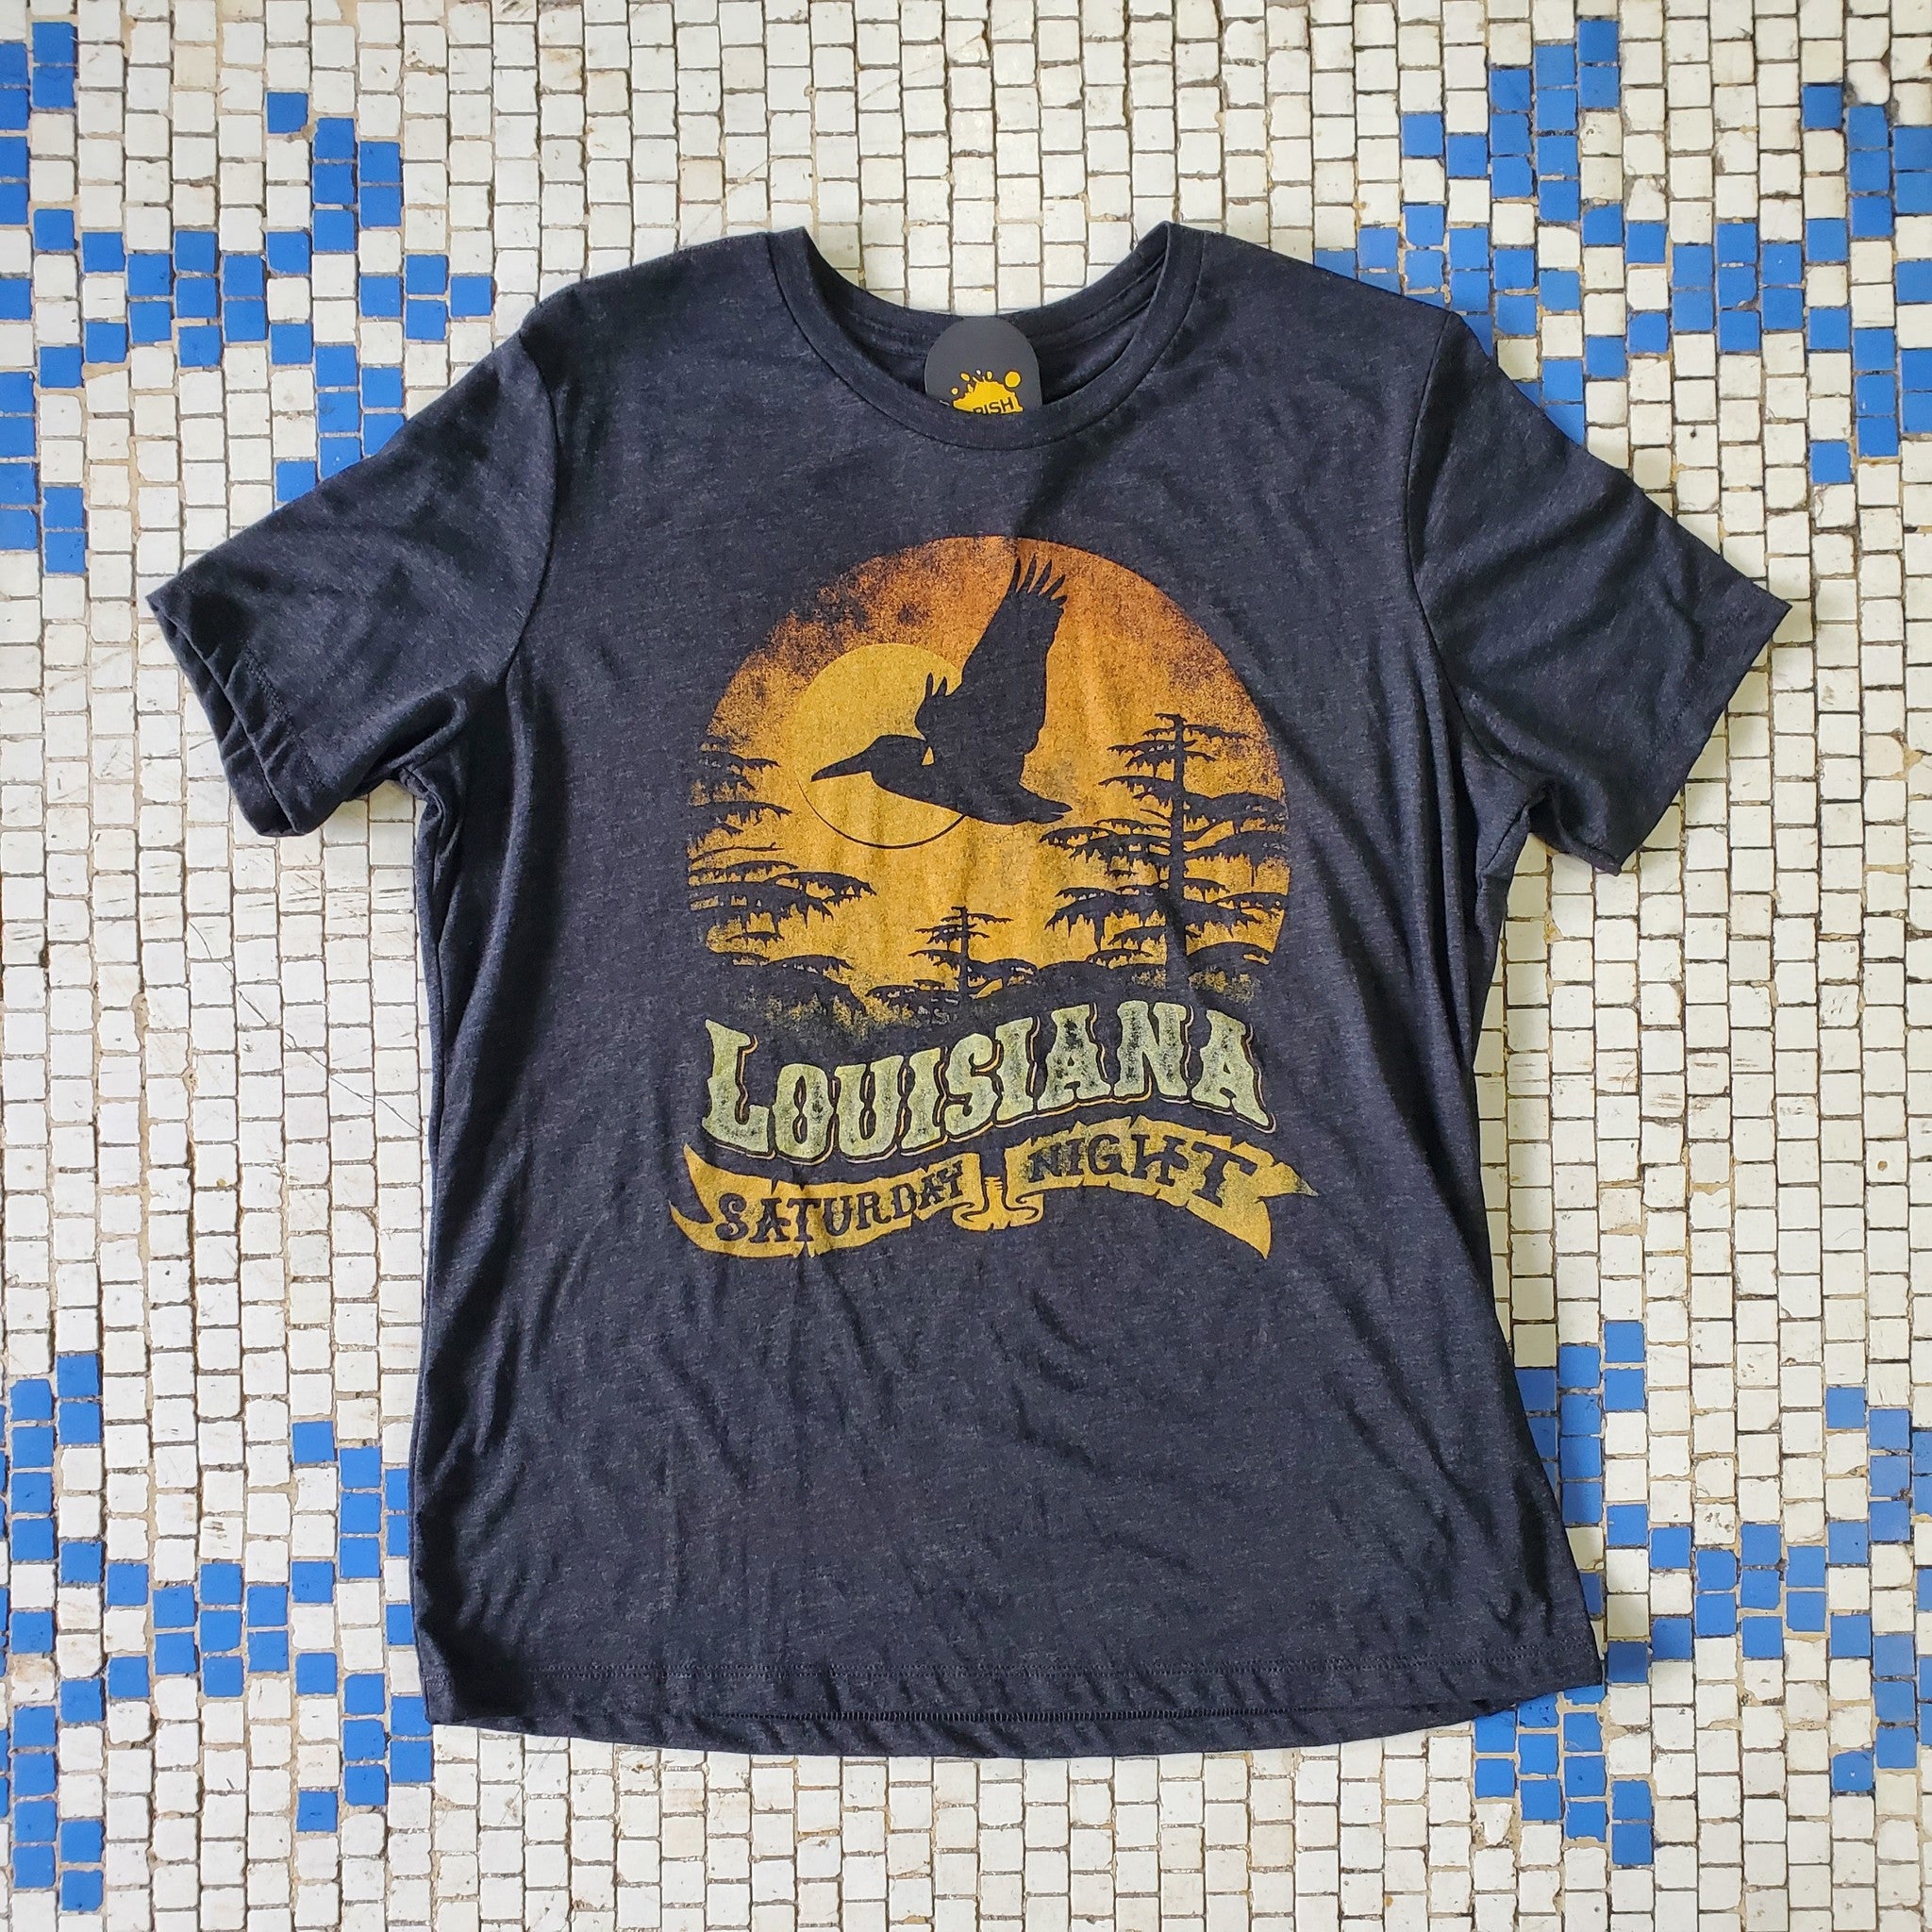 Vintage Louisiana Home State T-shirt, I Love Louisiana Shirt